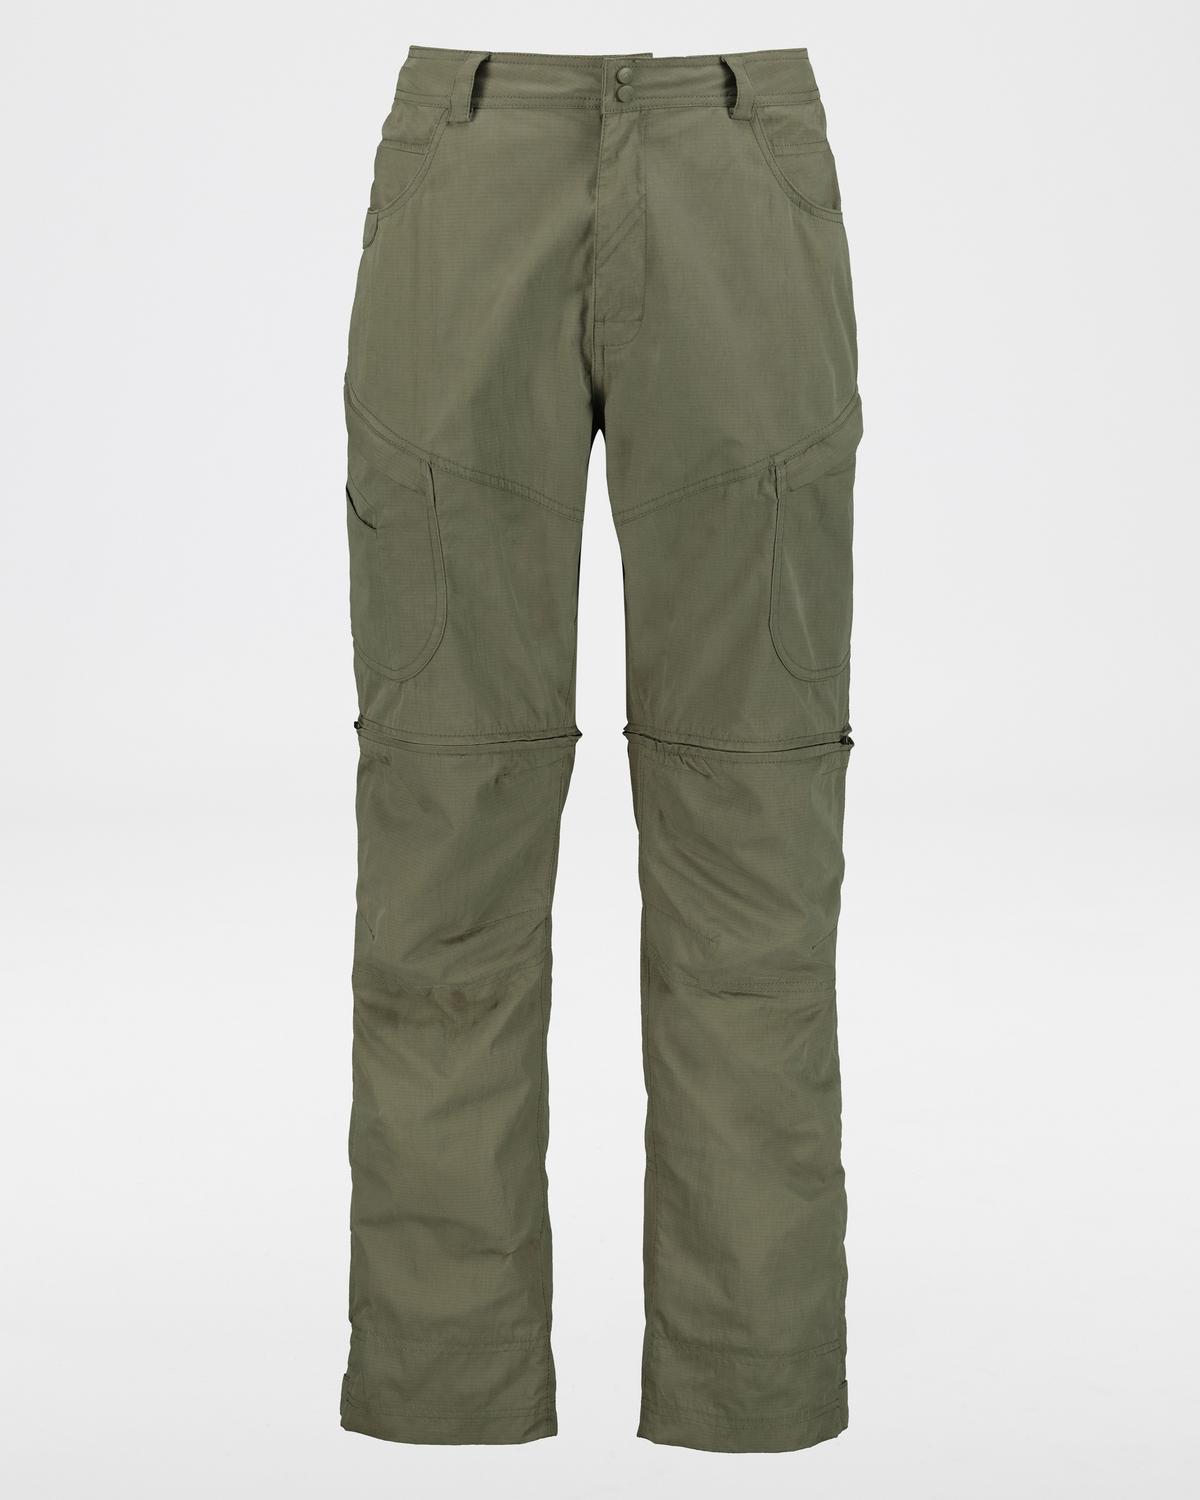 K-Way Men's Explorer Gorge Pants -  Dark Olive